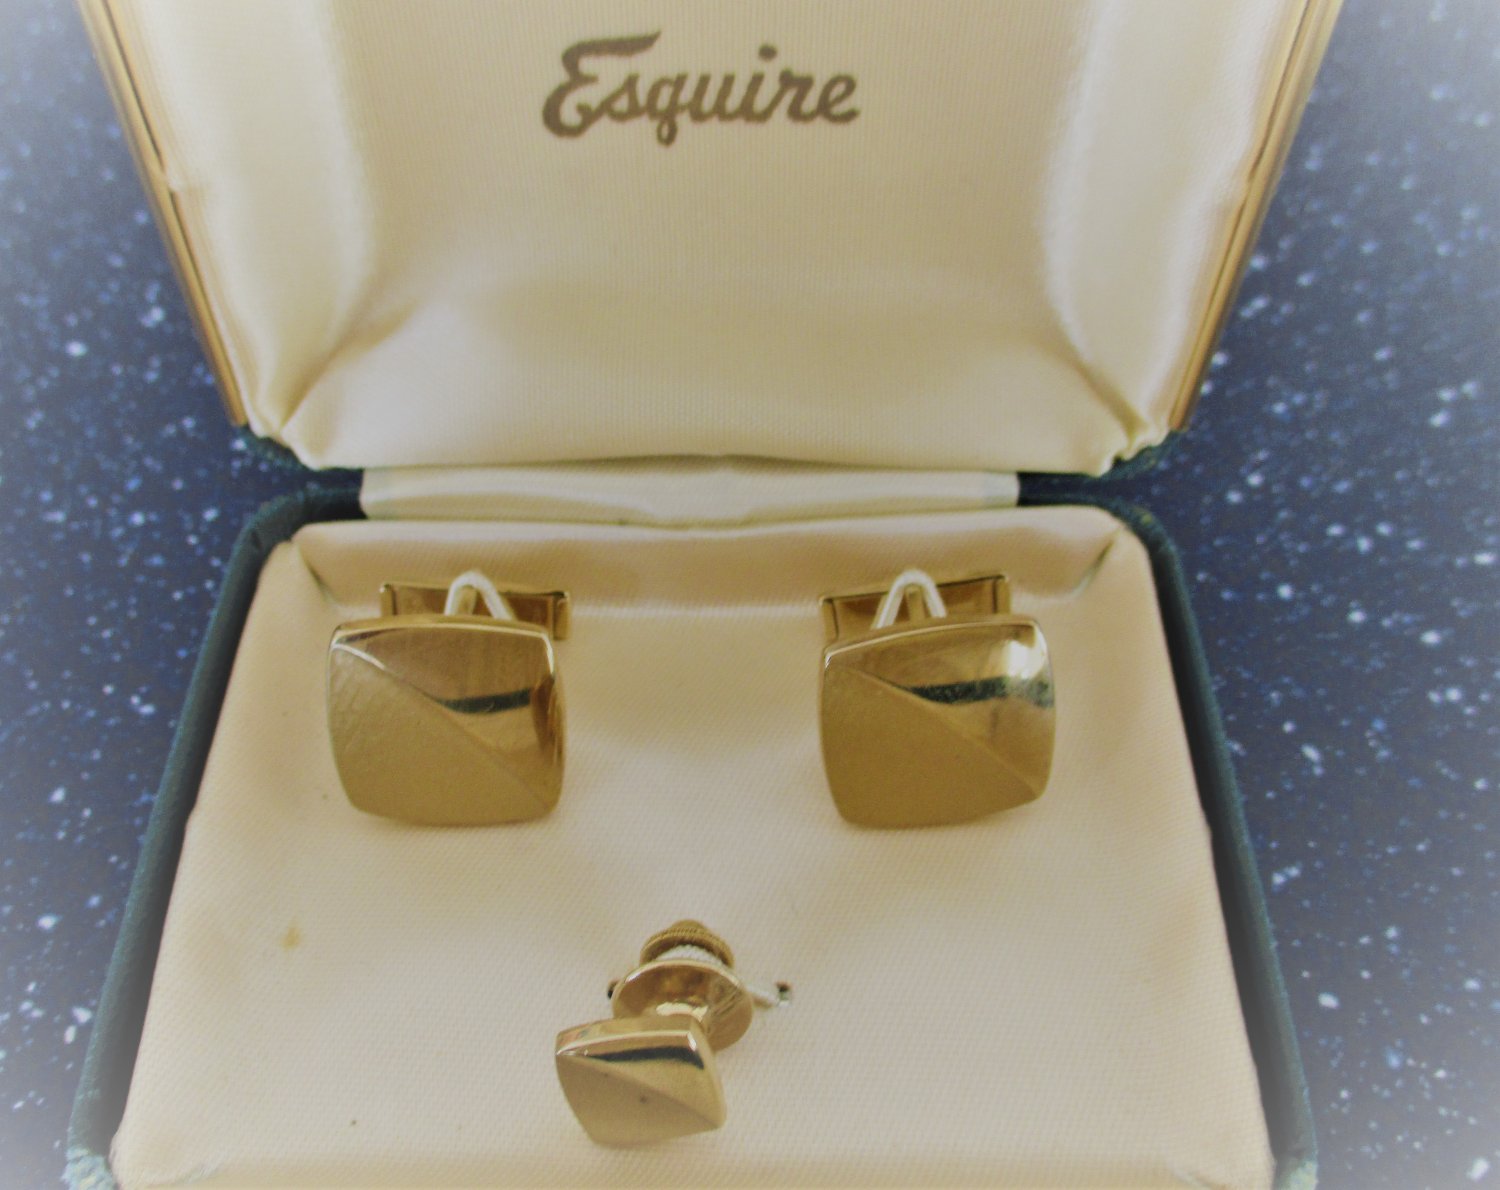 Vintage Esquire Cufflinks and Tie Tack in Original Box